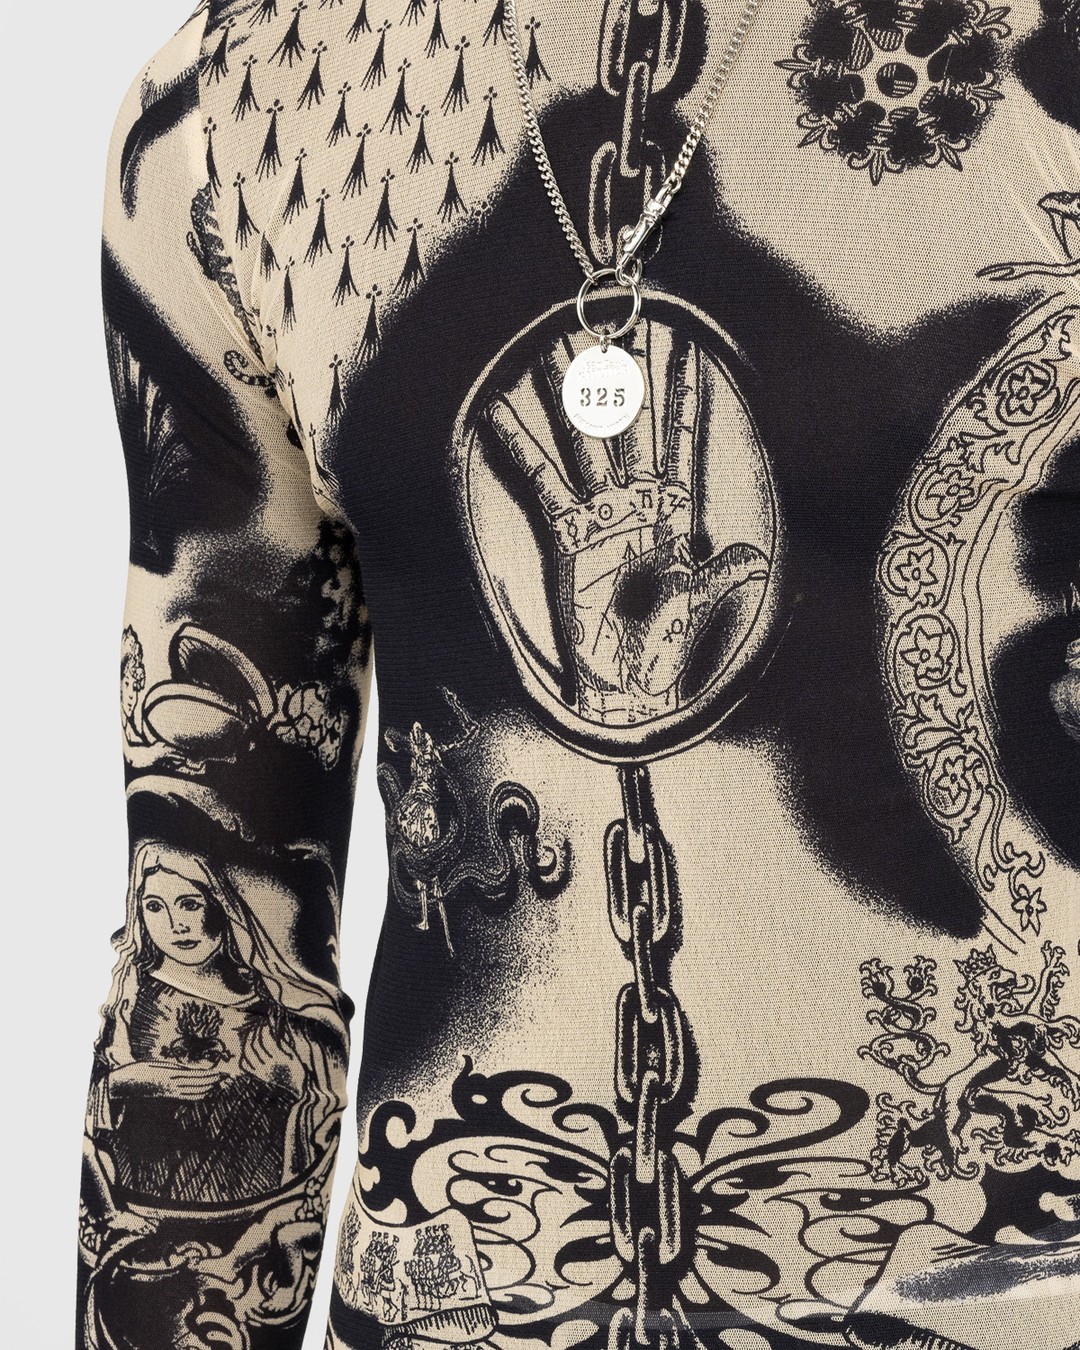 Jean Paul Gaultier Tattoo-print Long-sleeved Top